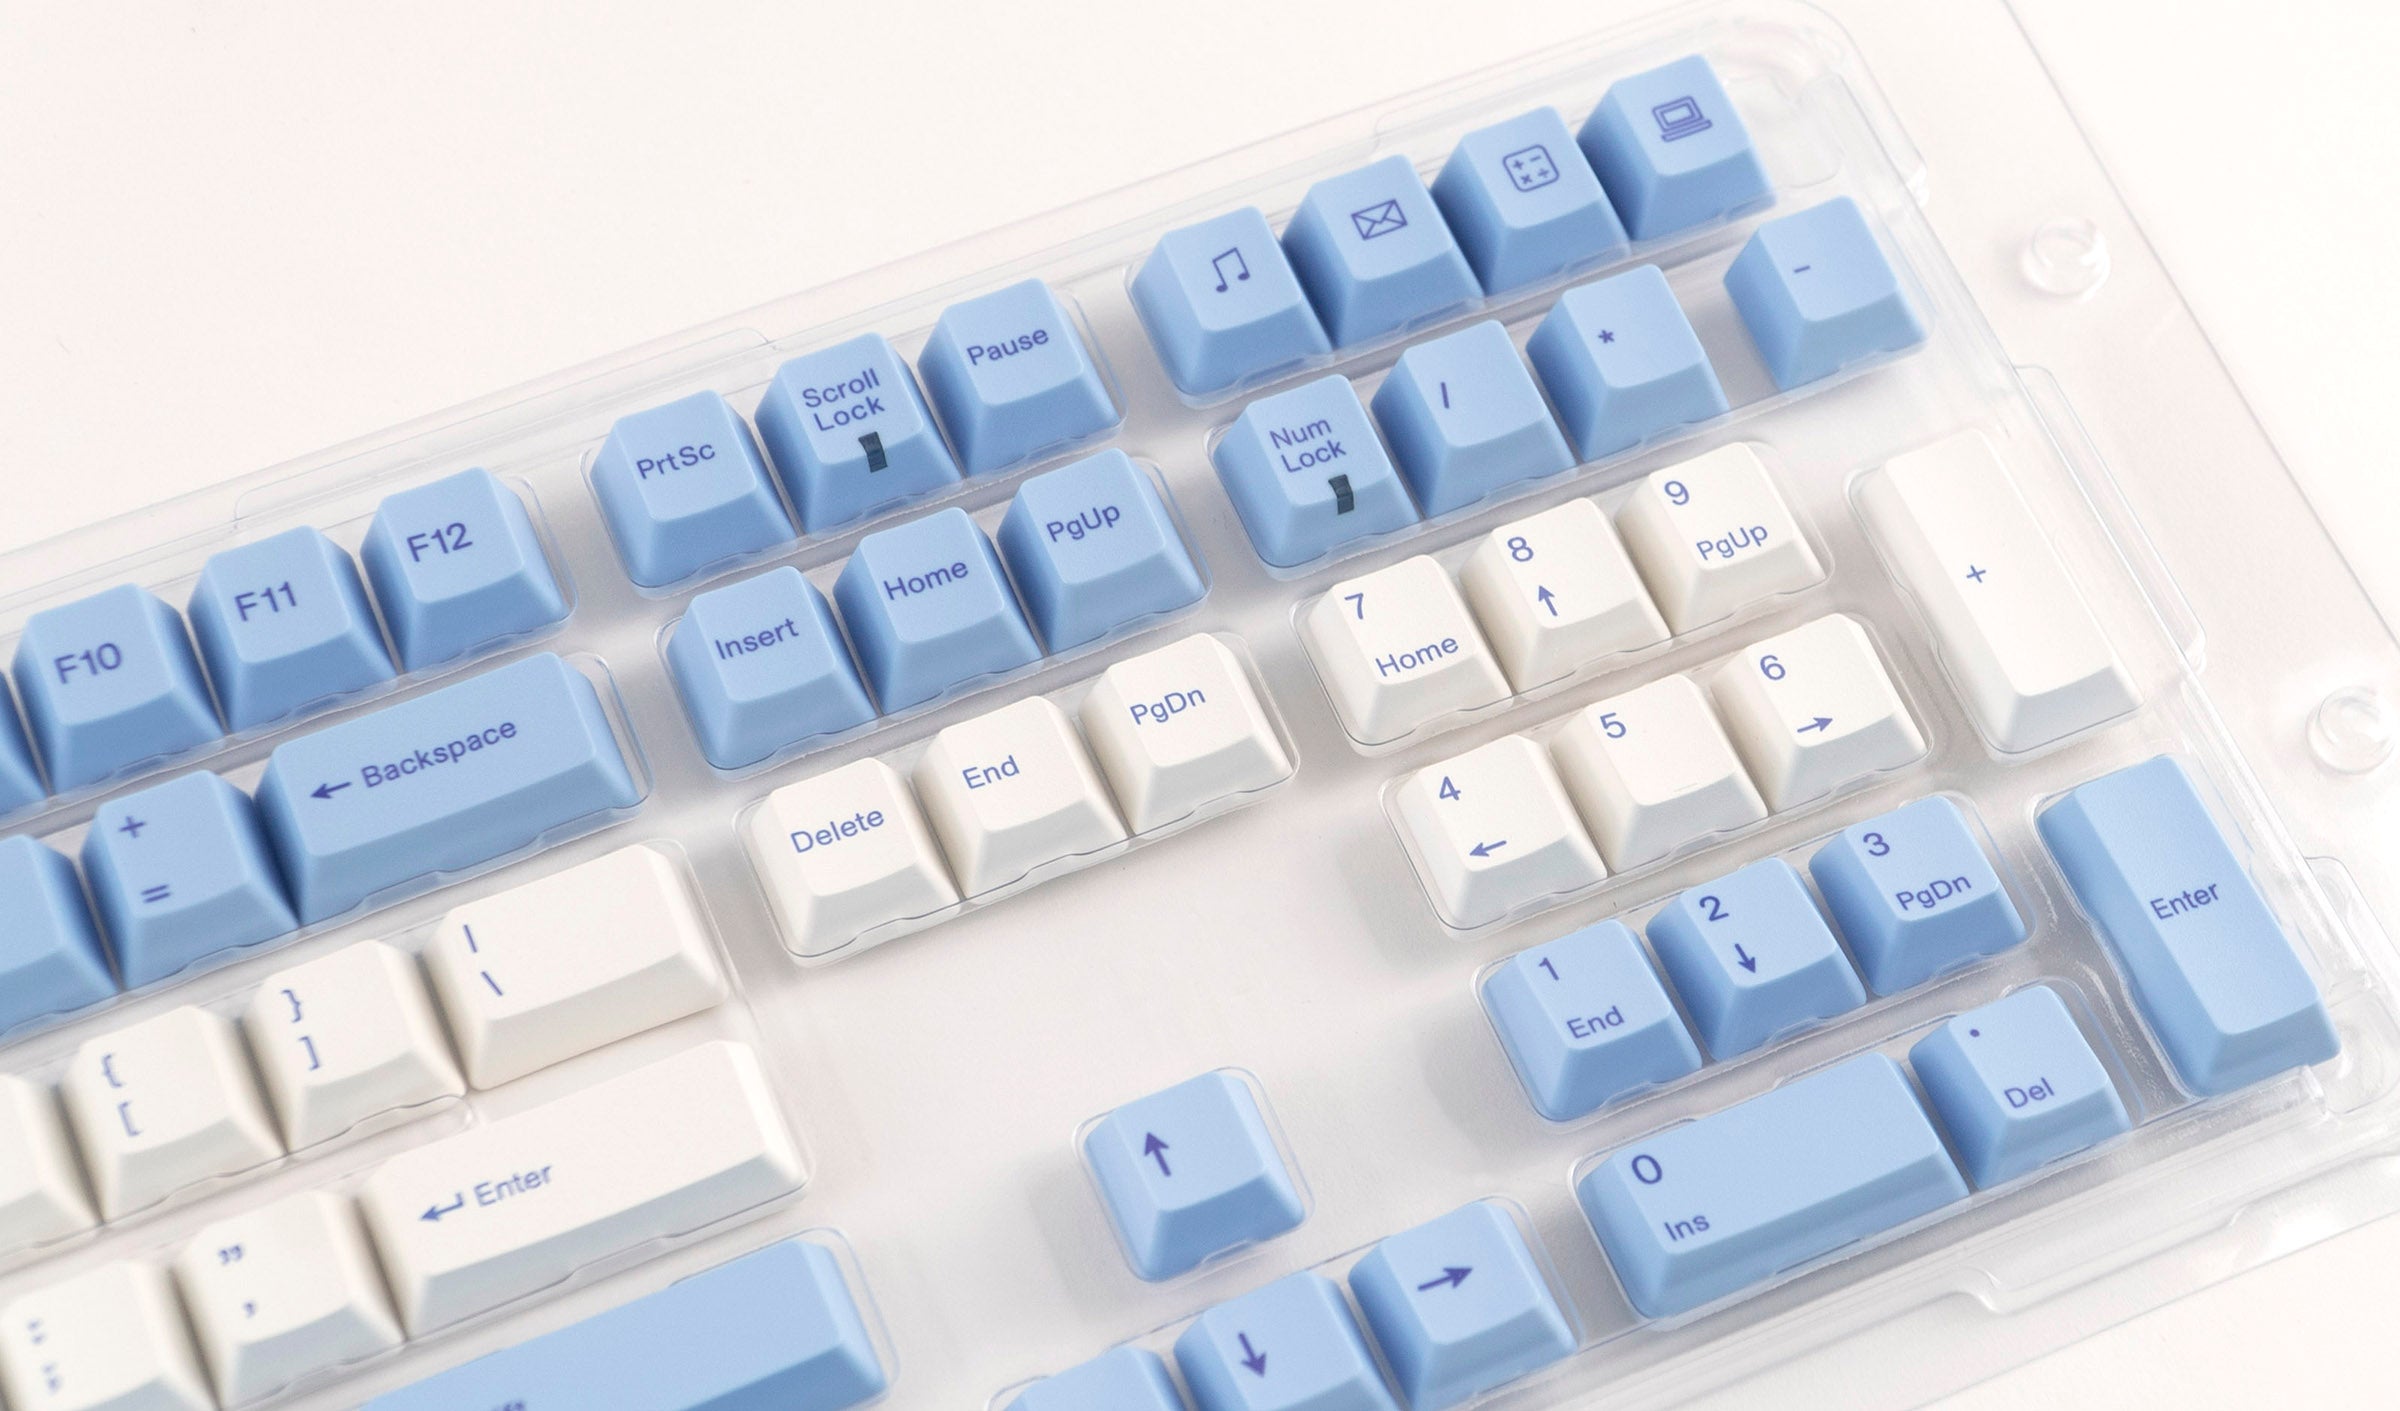 Varmilo 108-Key Dye Sub PBT Keycap Set White and Blue Santorini MKLFH60ZHH |34141|